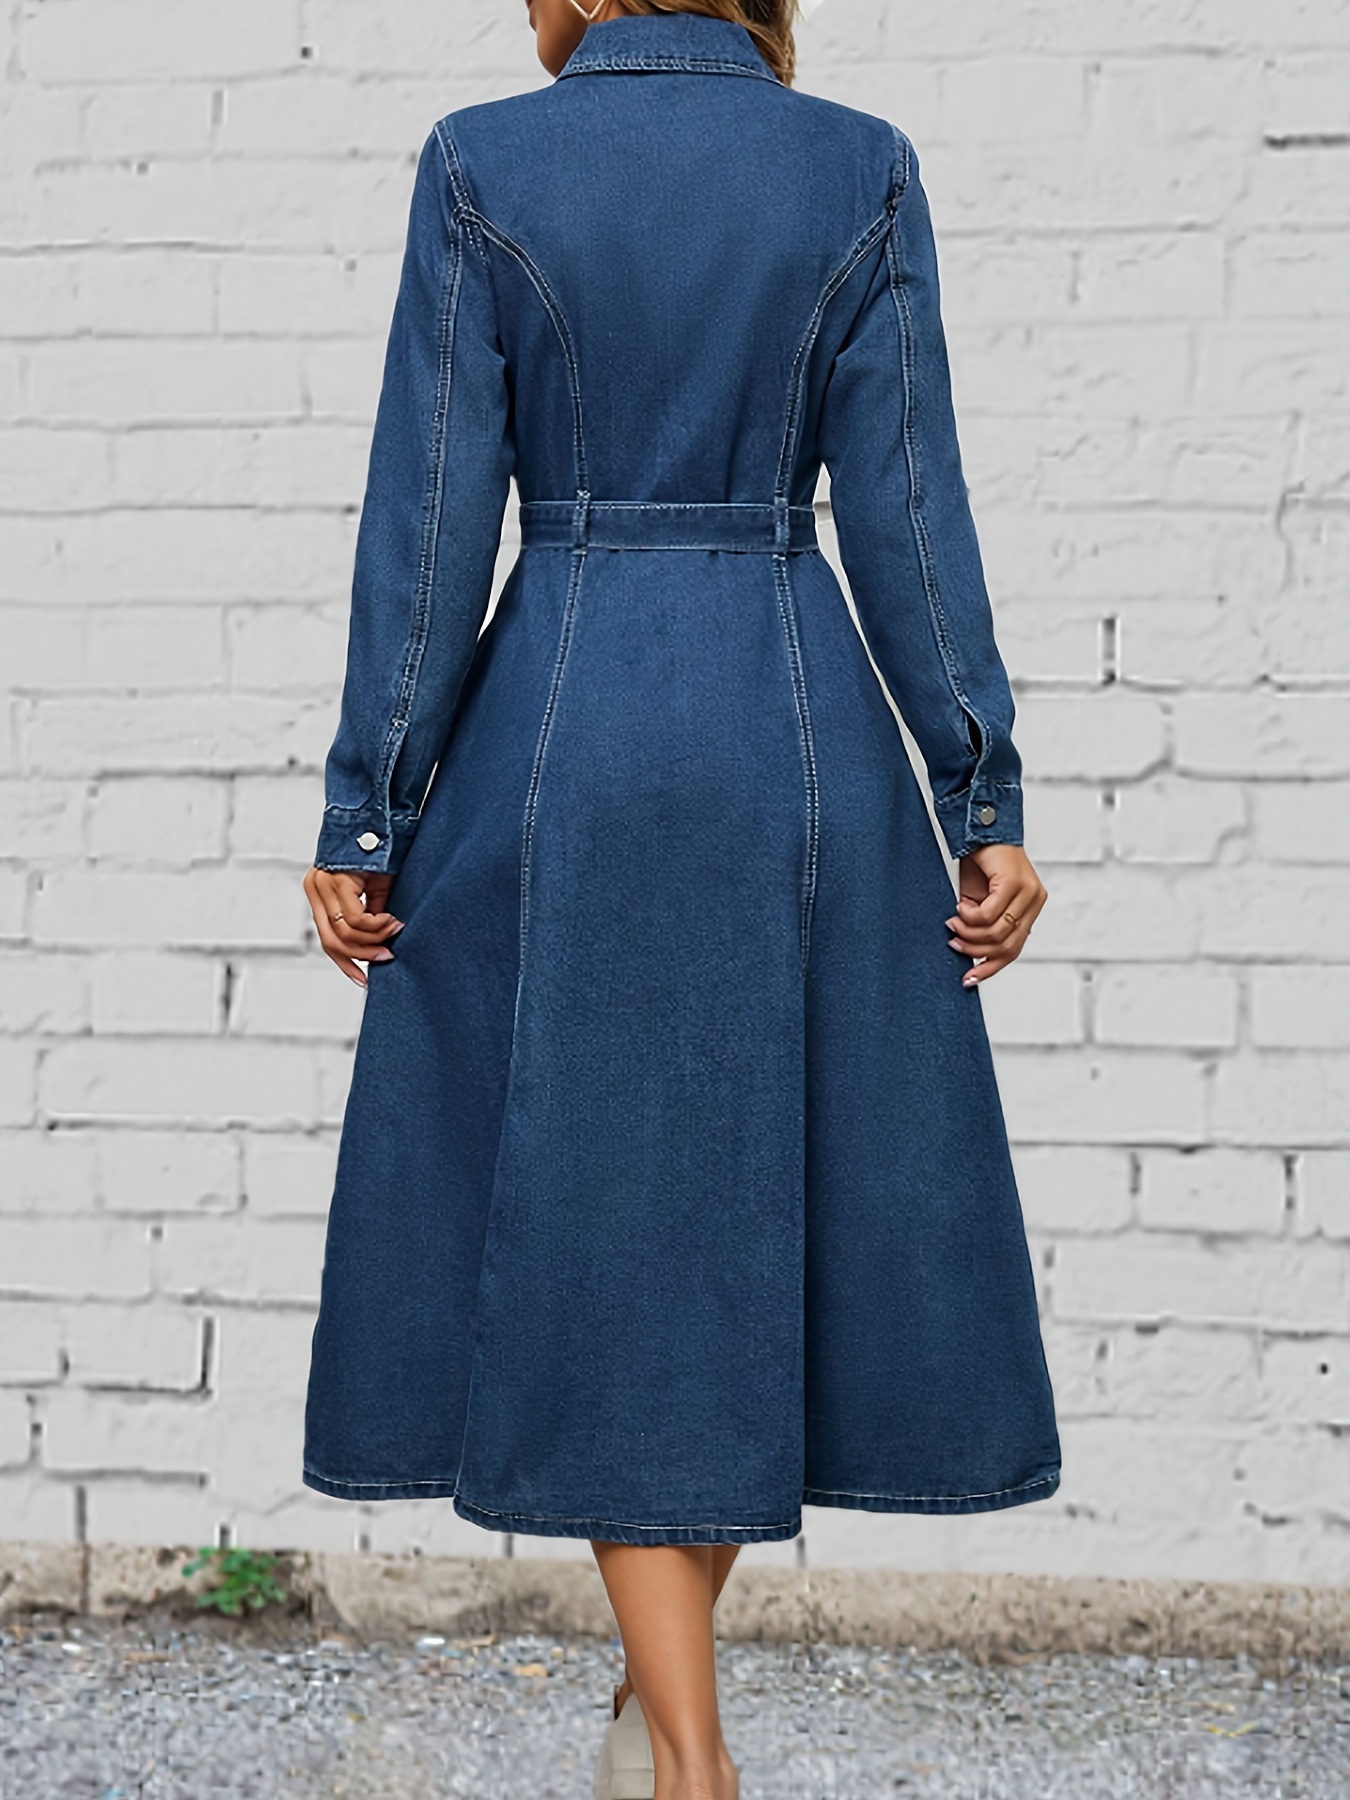 COLLARED DENIM DRESS - Mid-blue